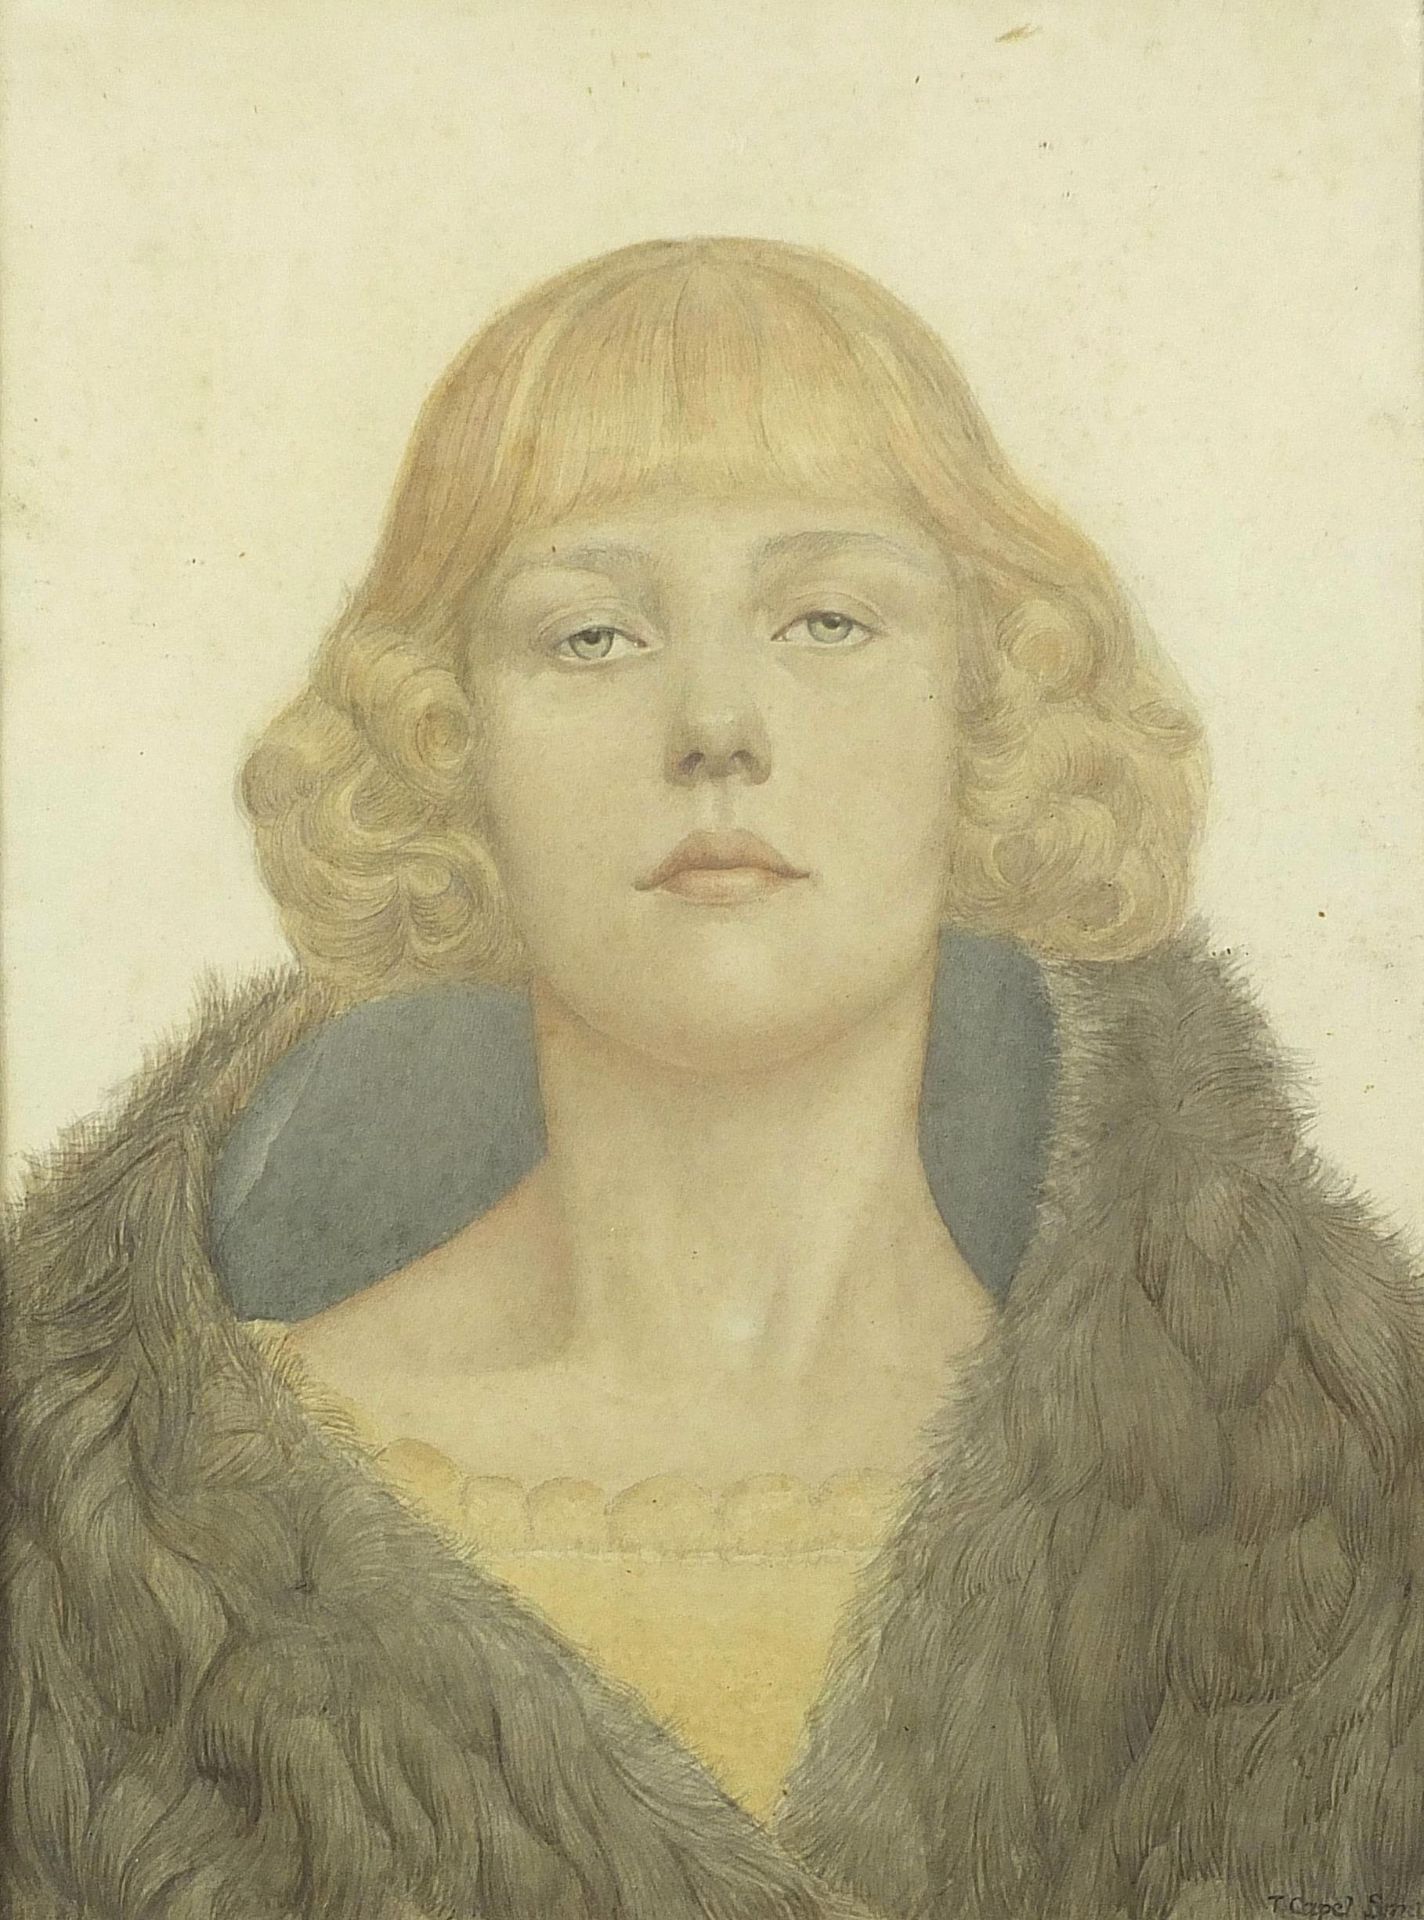 Thomas Capel Walton Smith - Head and shoulders portrait of an Art Nouveau female, early 20th century